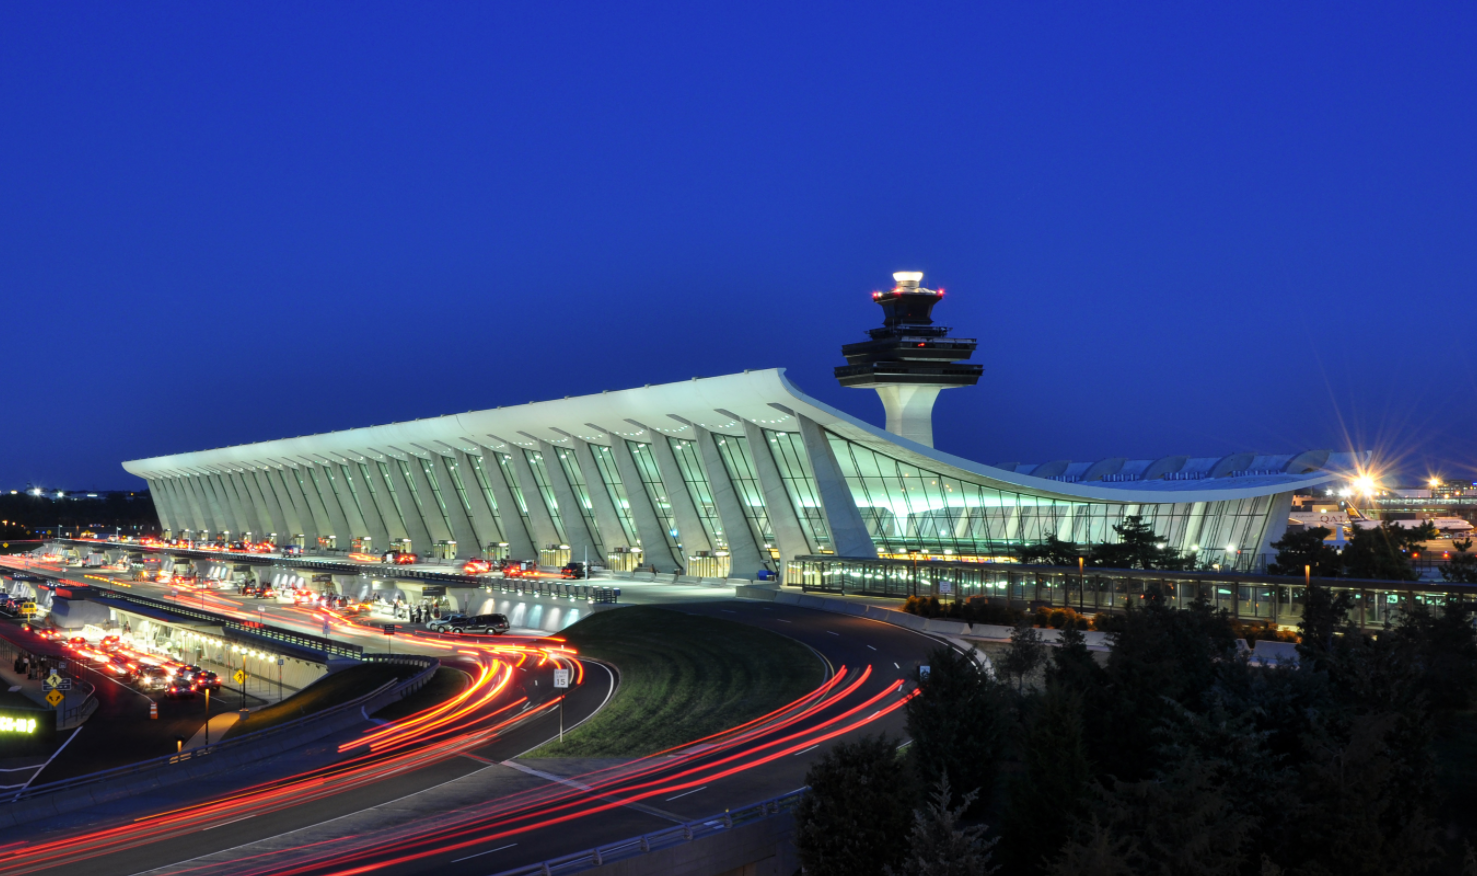 Dulles International Airport and Reagan National Airport